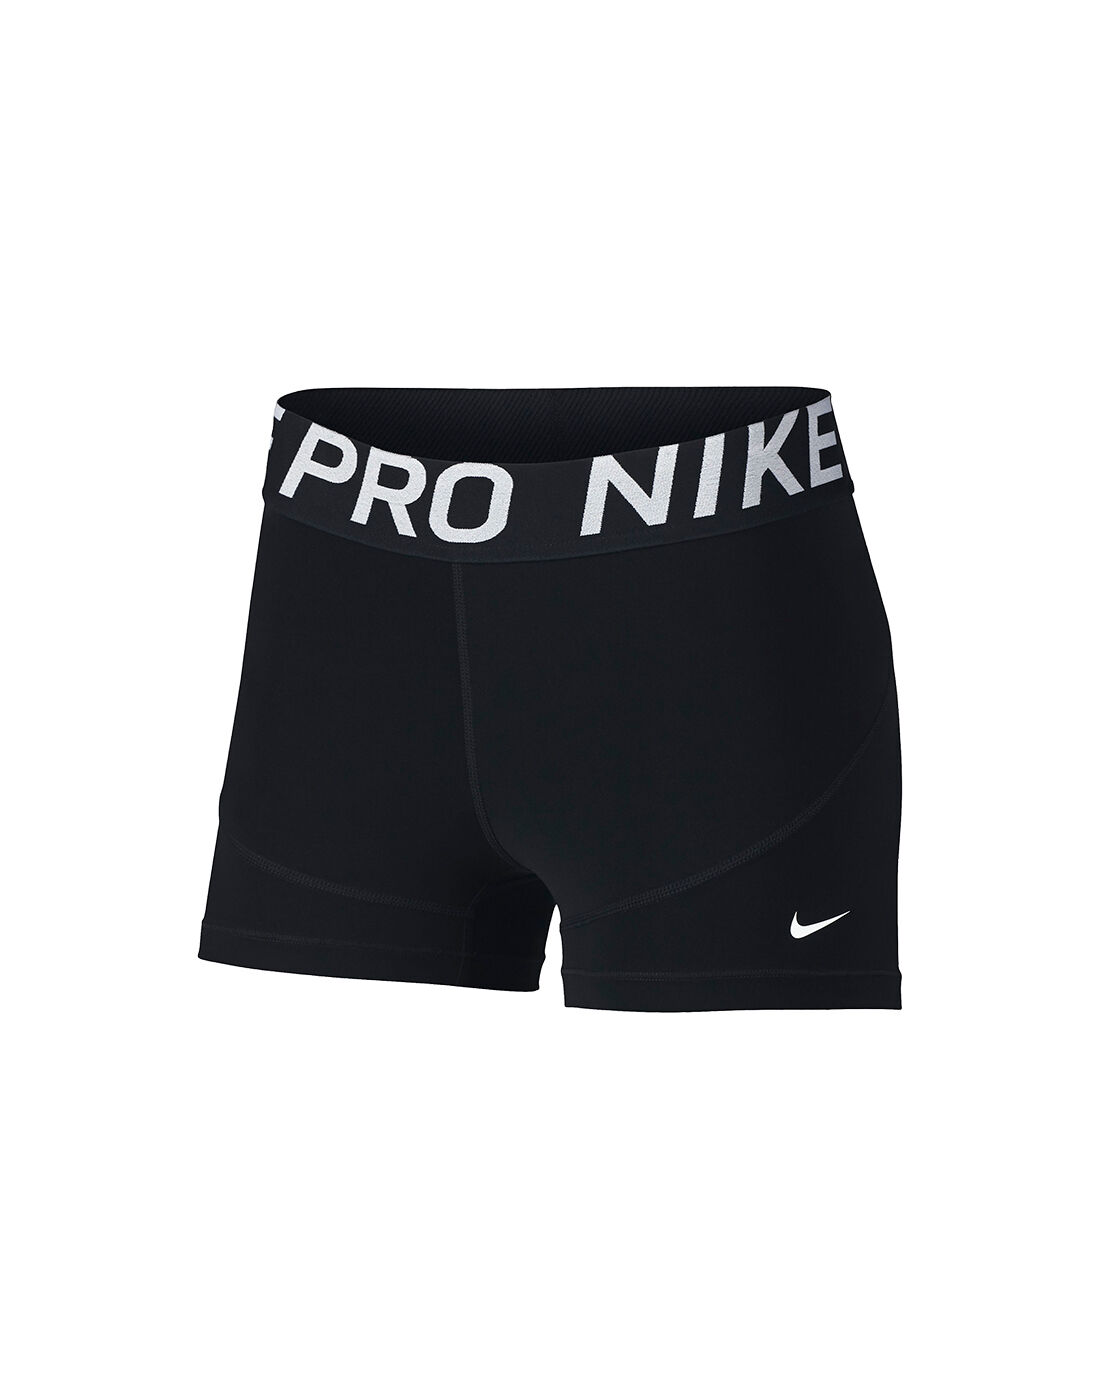 Women's Black Nike Pro Gym Shorts 